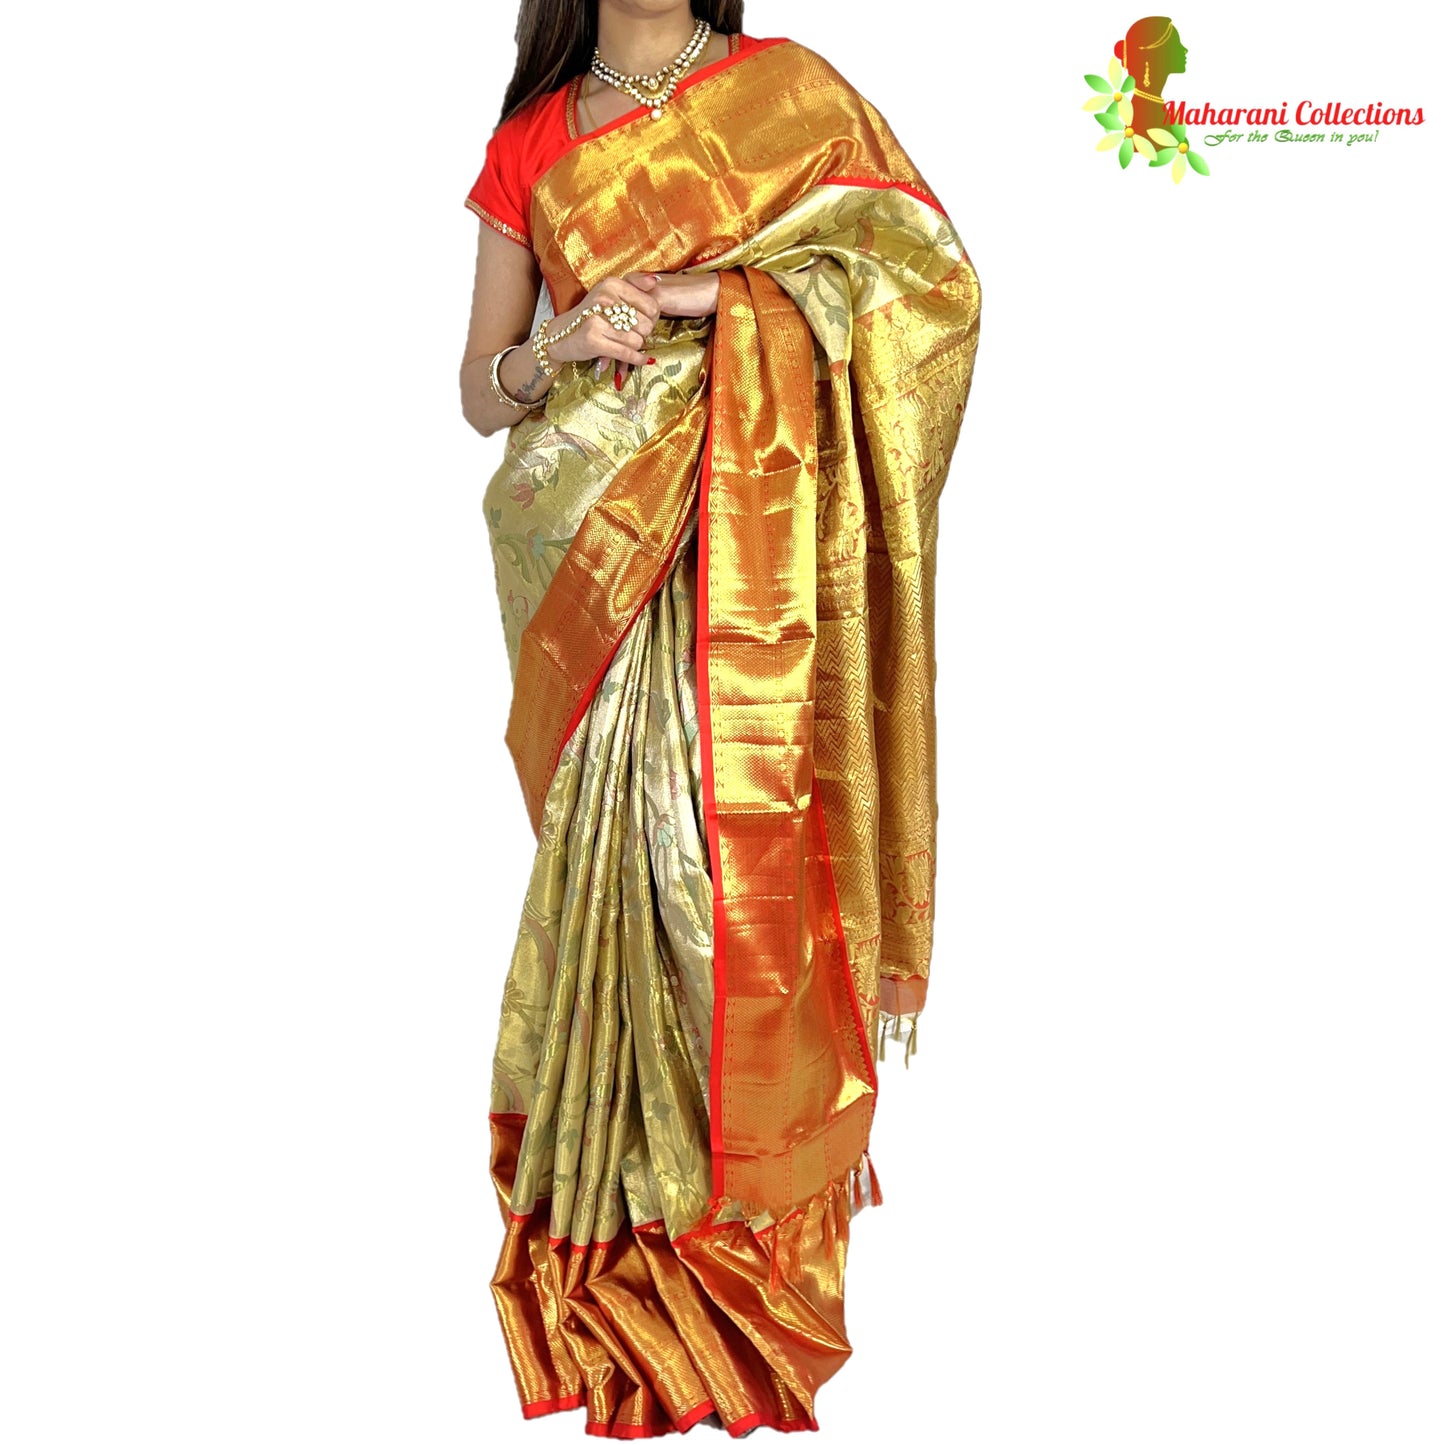 Maharani's Pure Handloom Kanjivaram Silk Saree - Olive Green/Red Border with Golden Zari and Boota Work